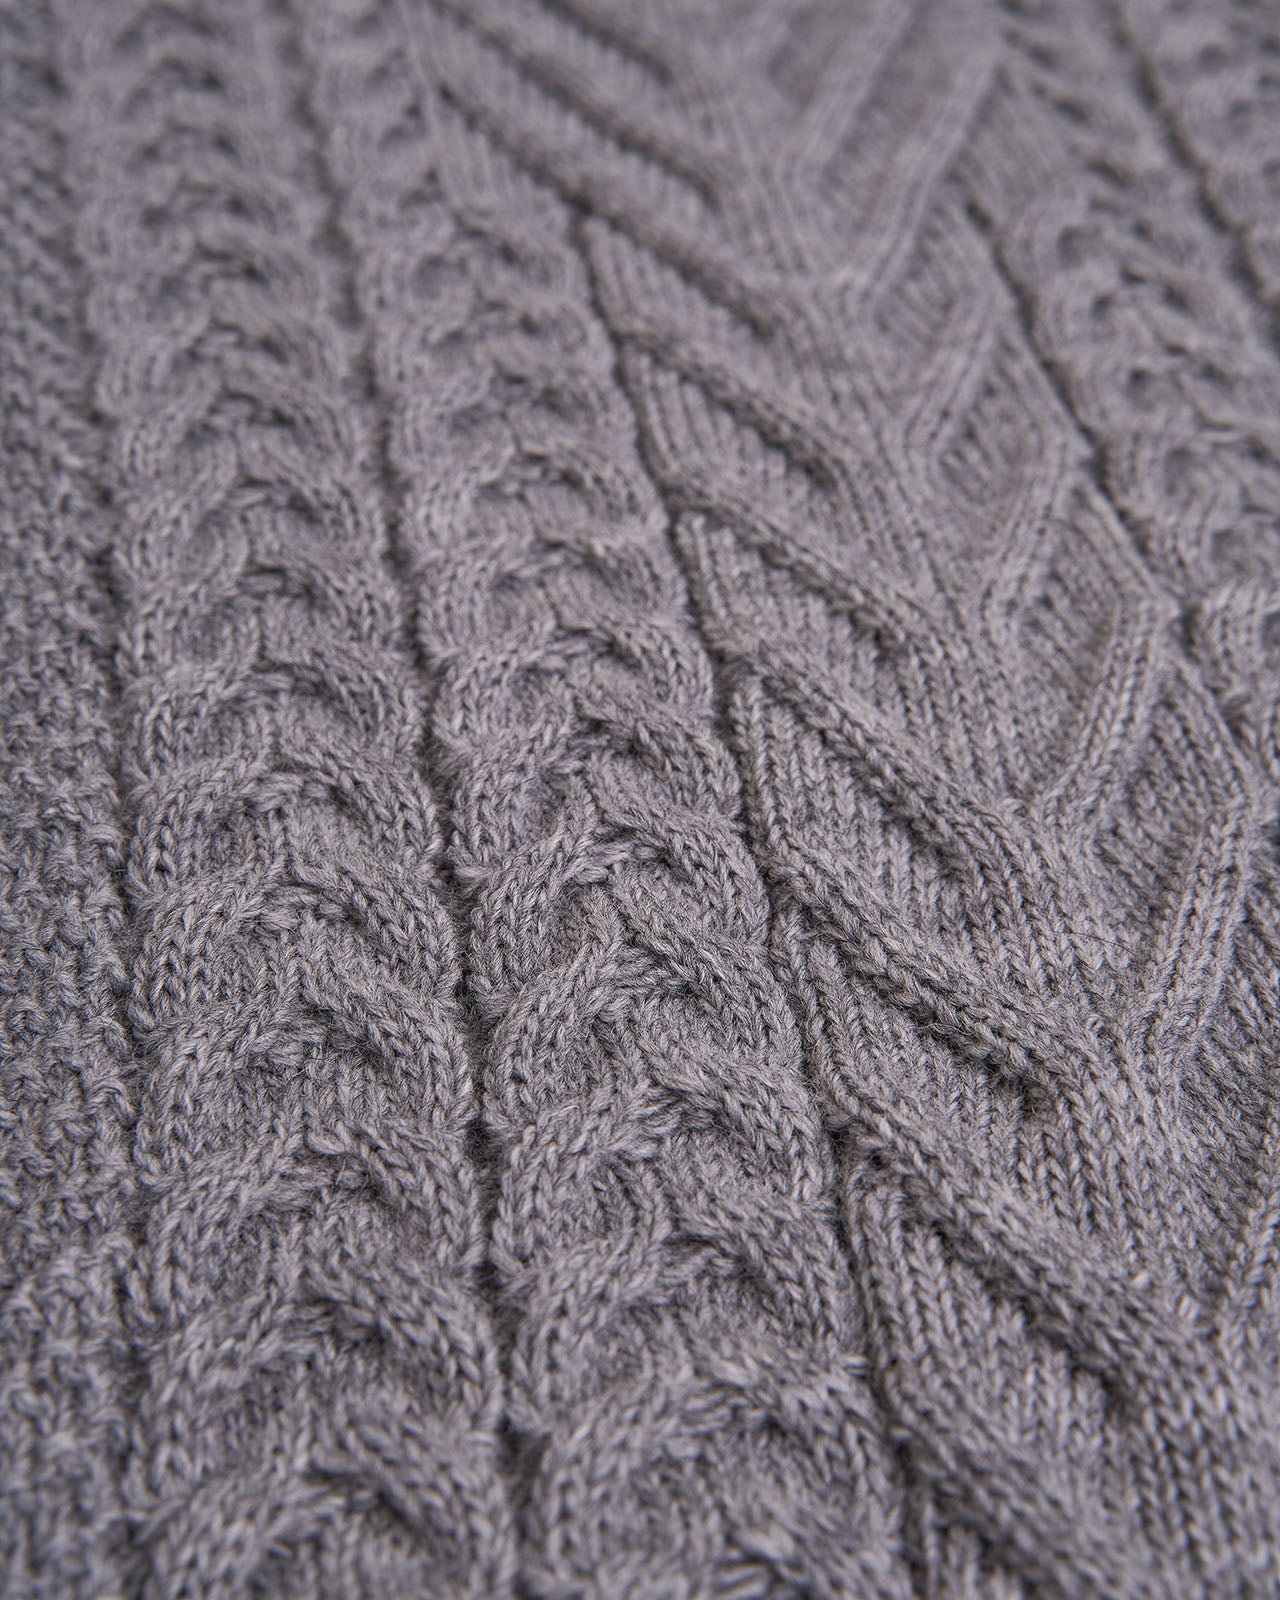 Details of women's wool braided sweater